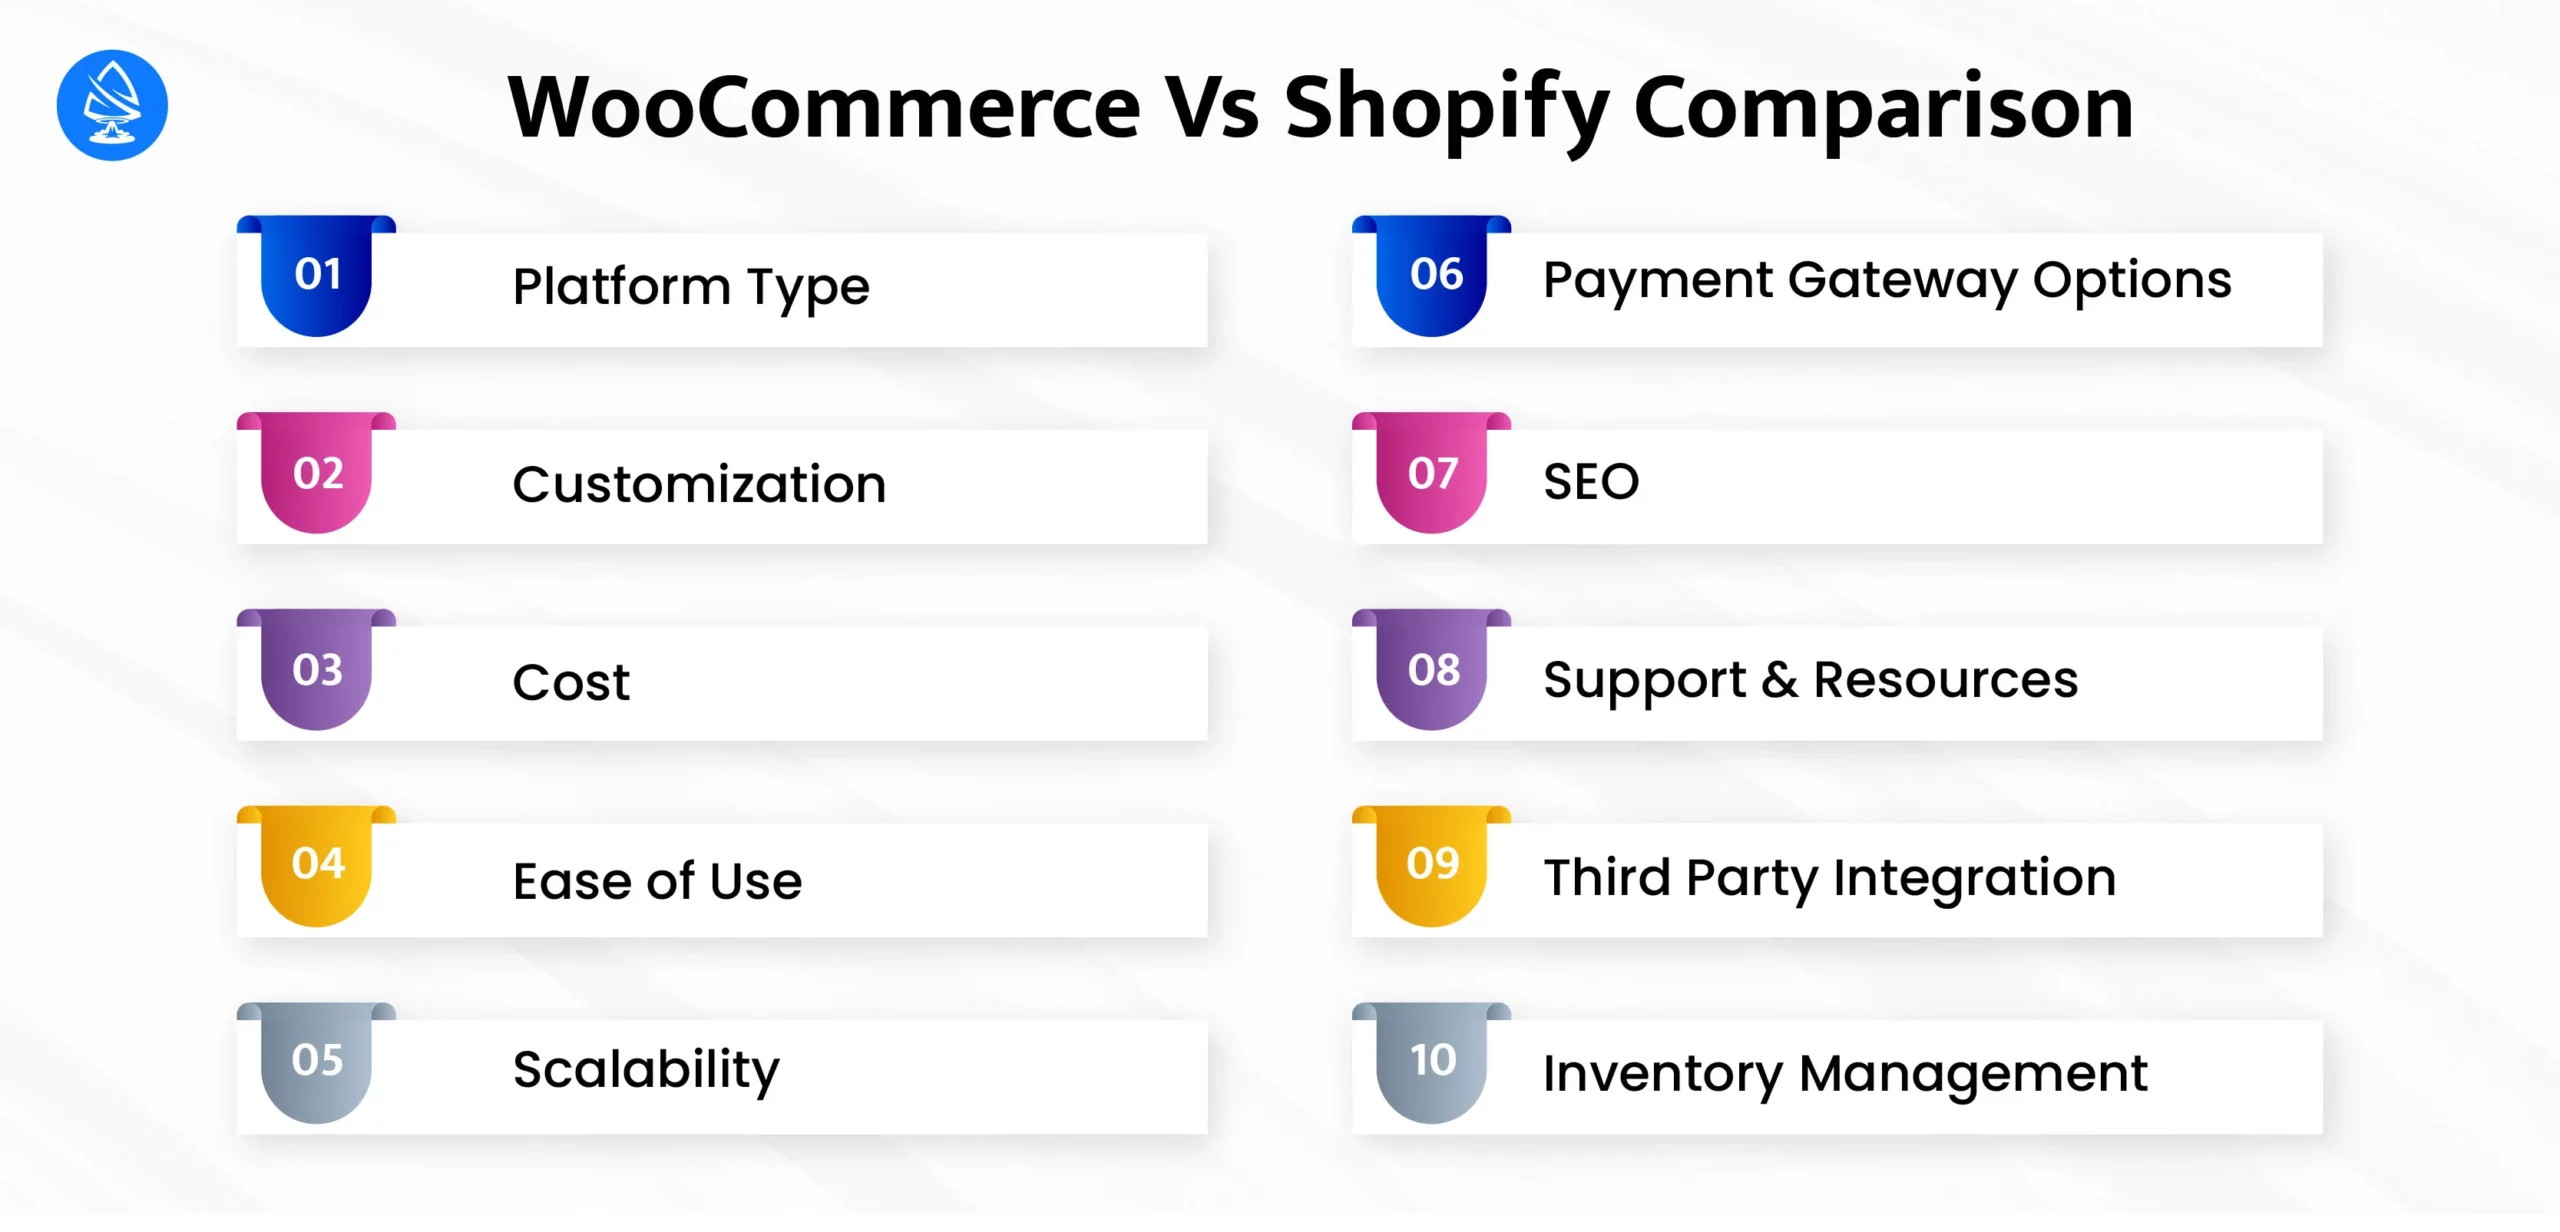 WooCommerce vs Shopify: Comparison 